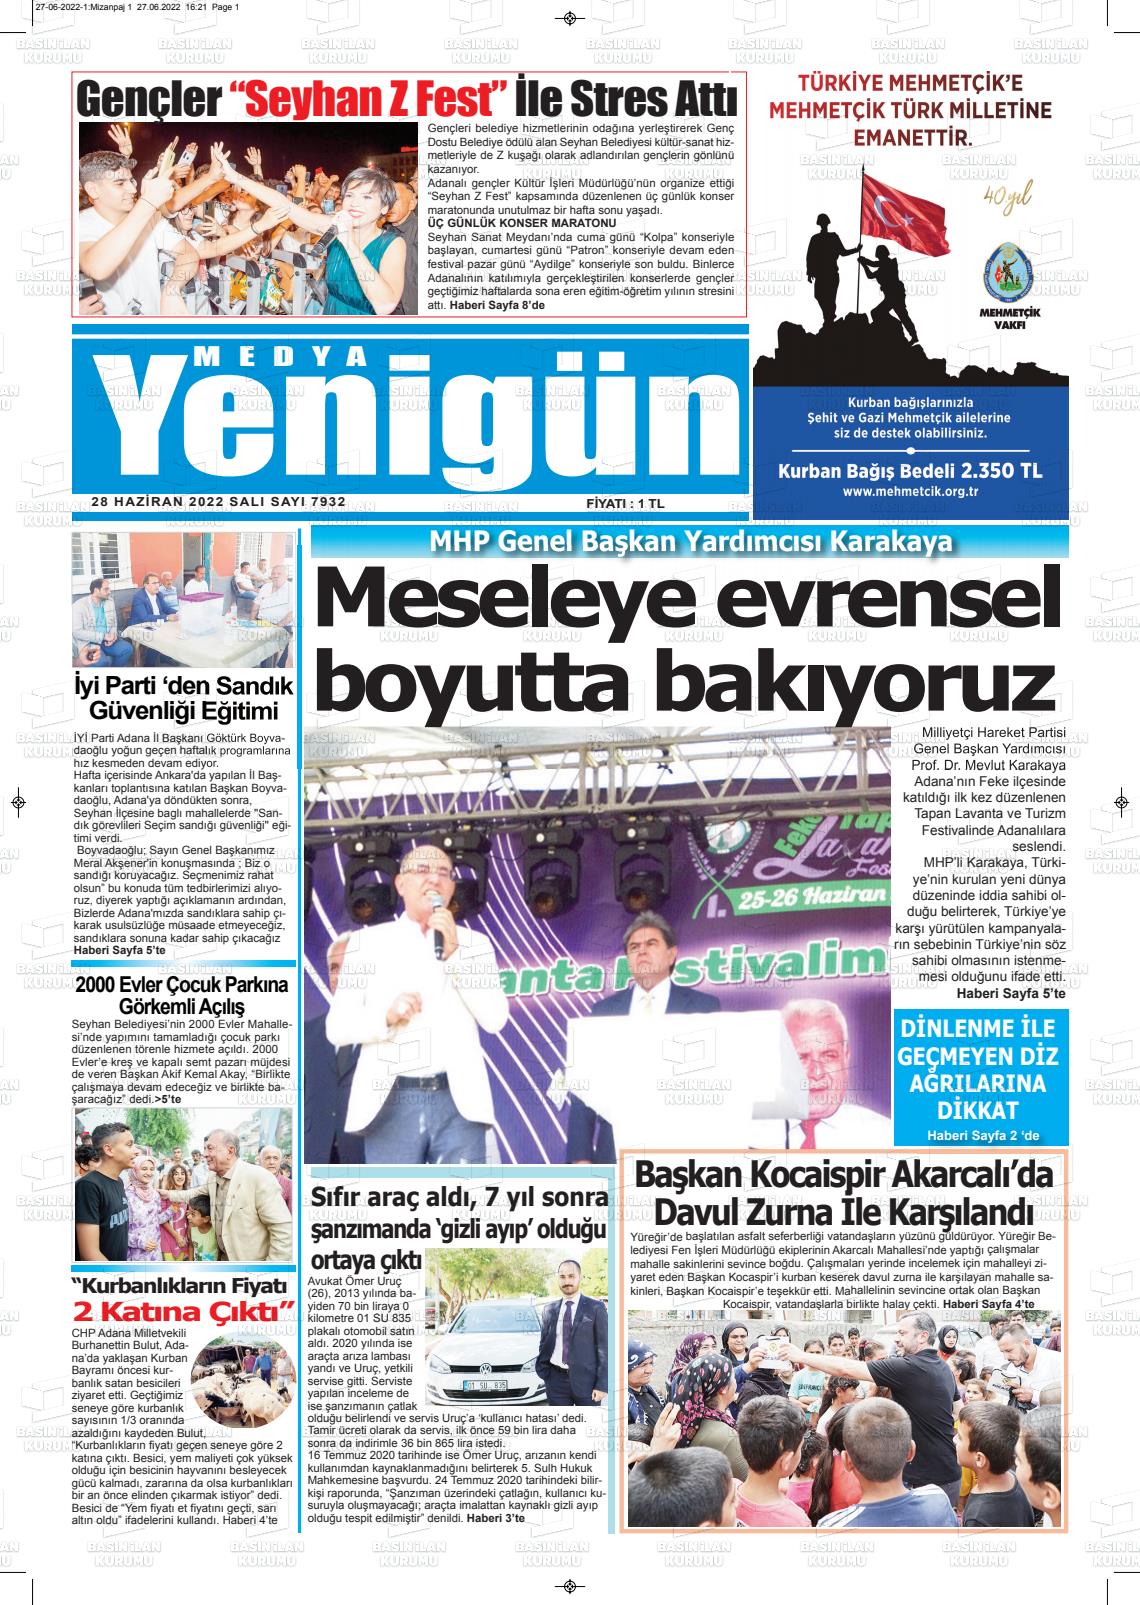 28 Haziran 2022 Medya Yenigün Gazete Manşeti